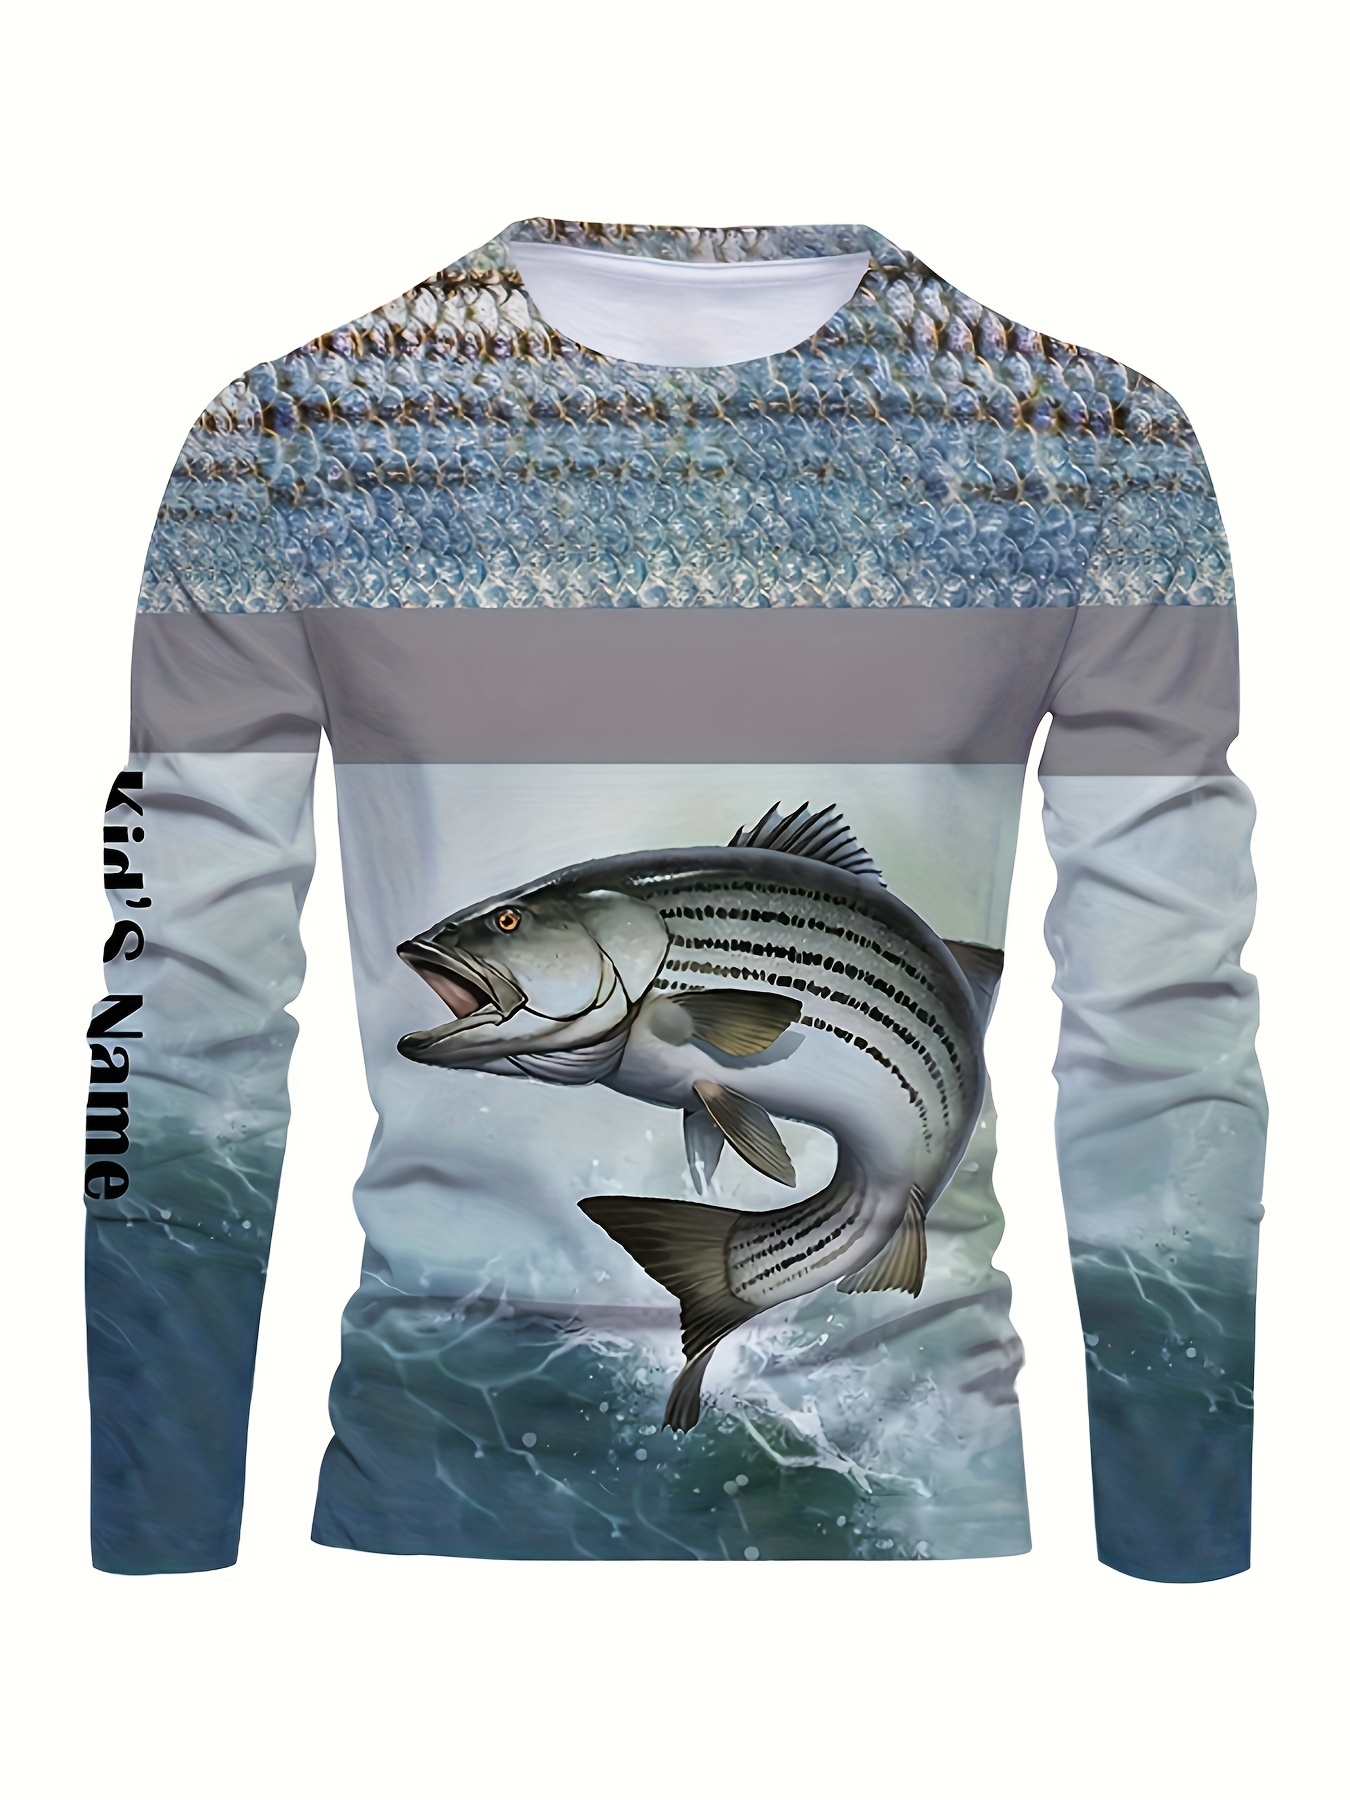 Fish Print Long Sleeve Fishing Shirts & Pants For Men, Novelty Pjs Tops  Pullovers Tops & Trousers Set, Men's Trendy Clothing